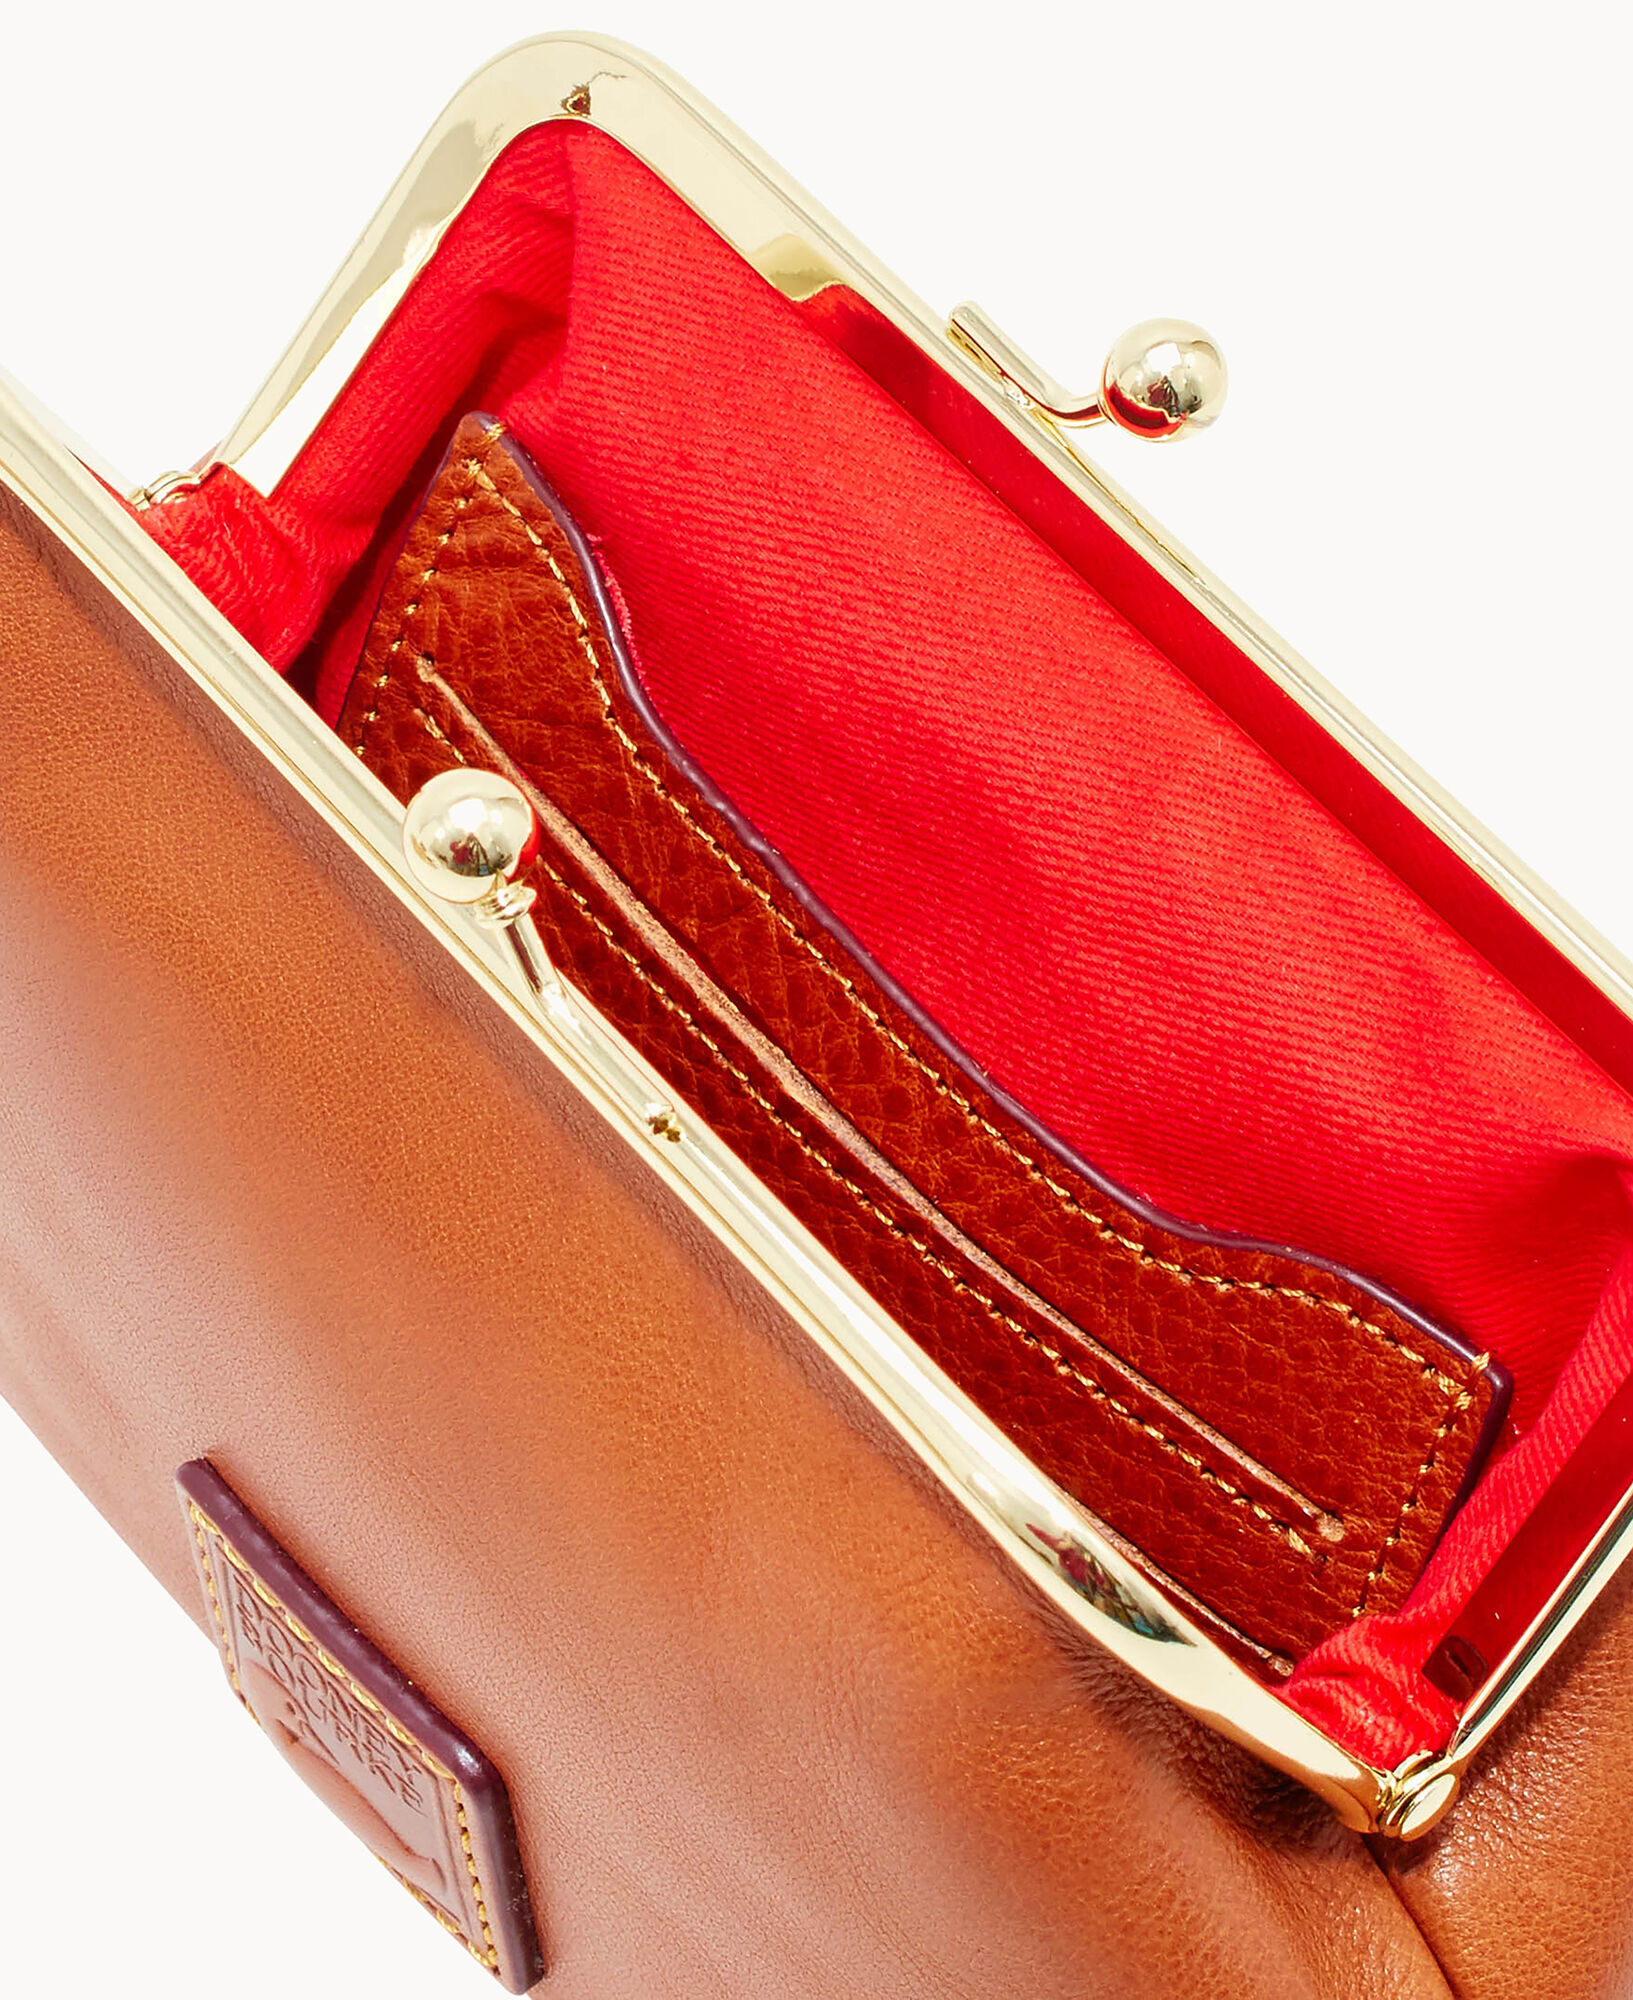 coco chanel classic handbag